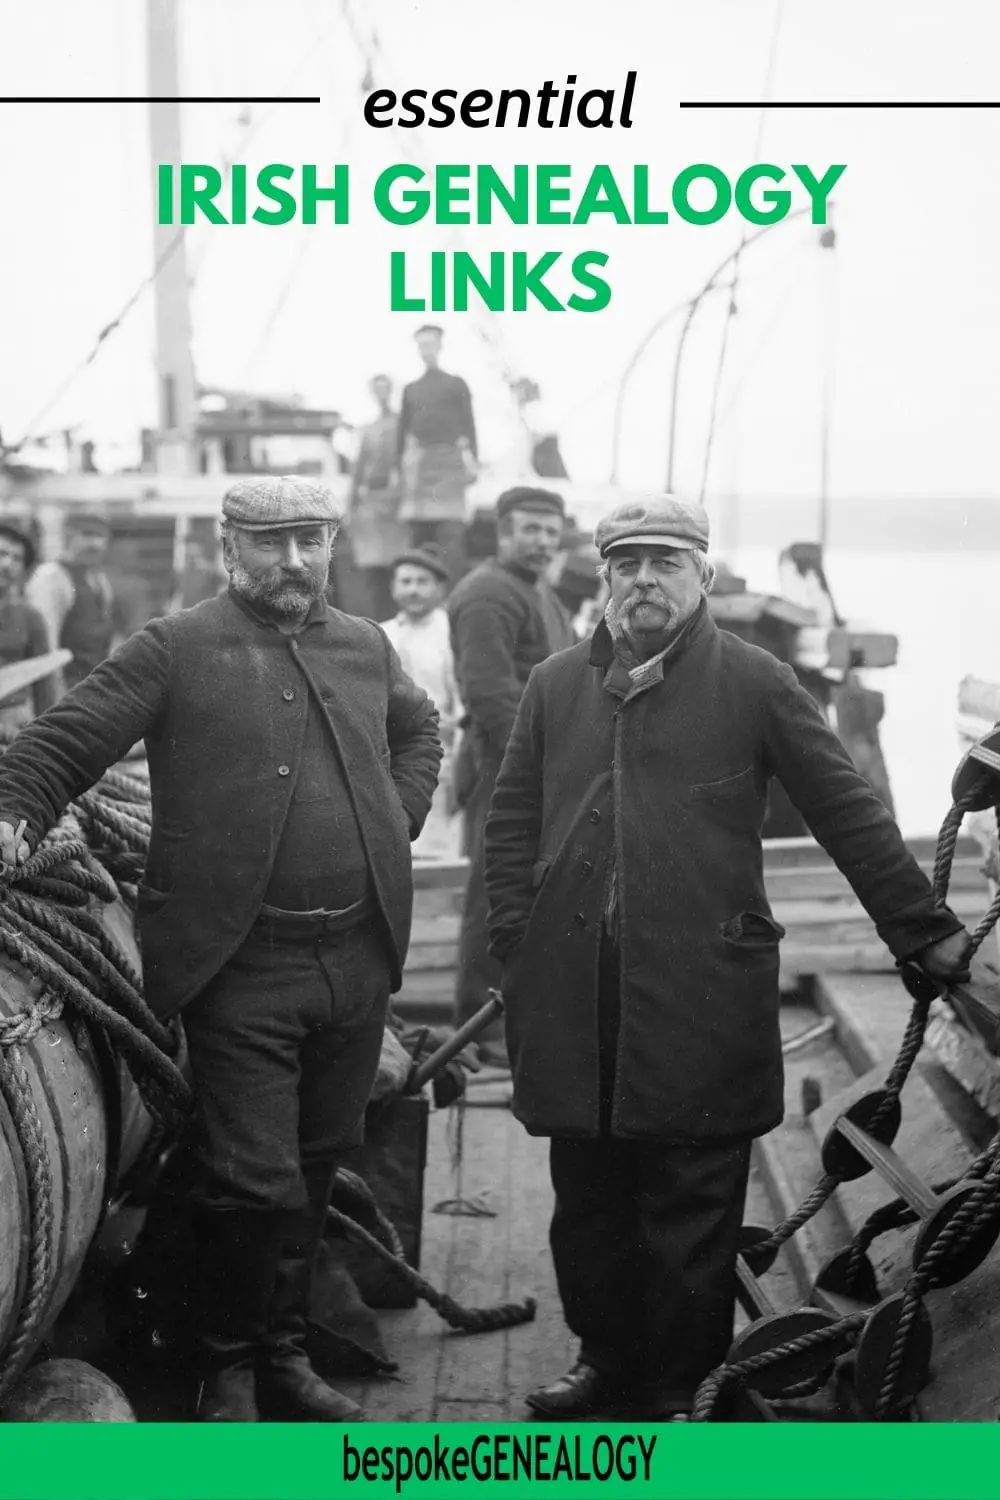 Essential Irish genealogy links. Victorian photo of the crew of a small Irish ship on deck